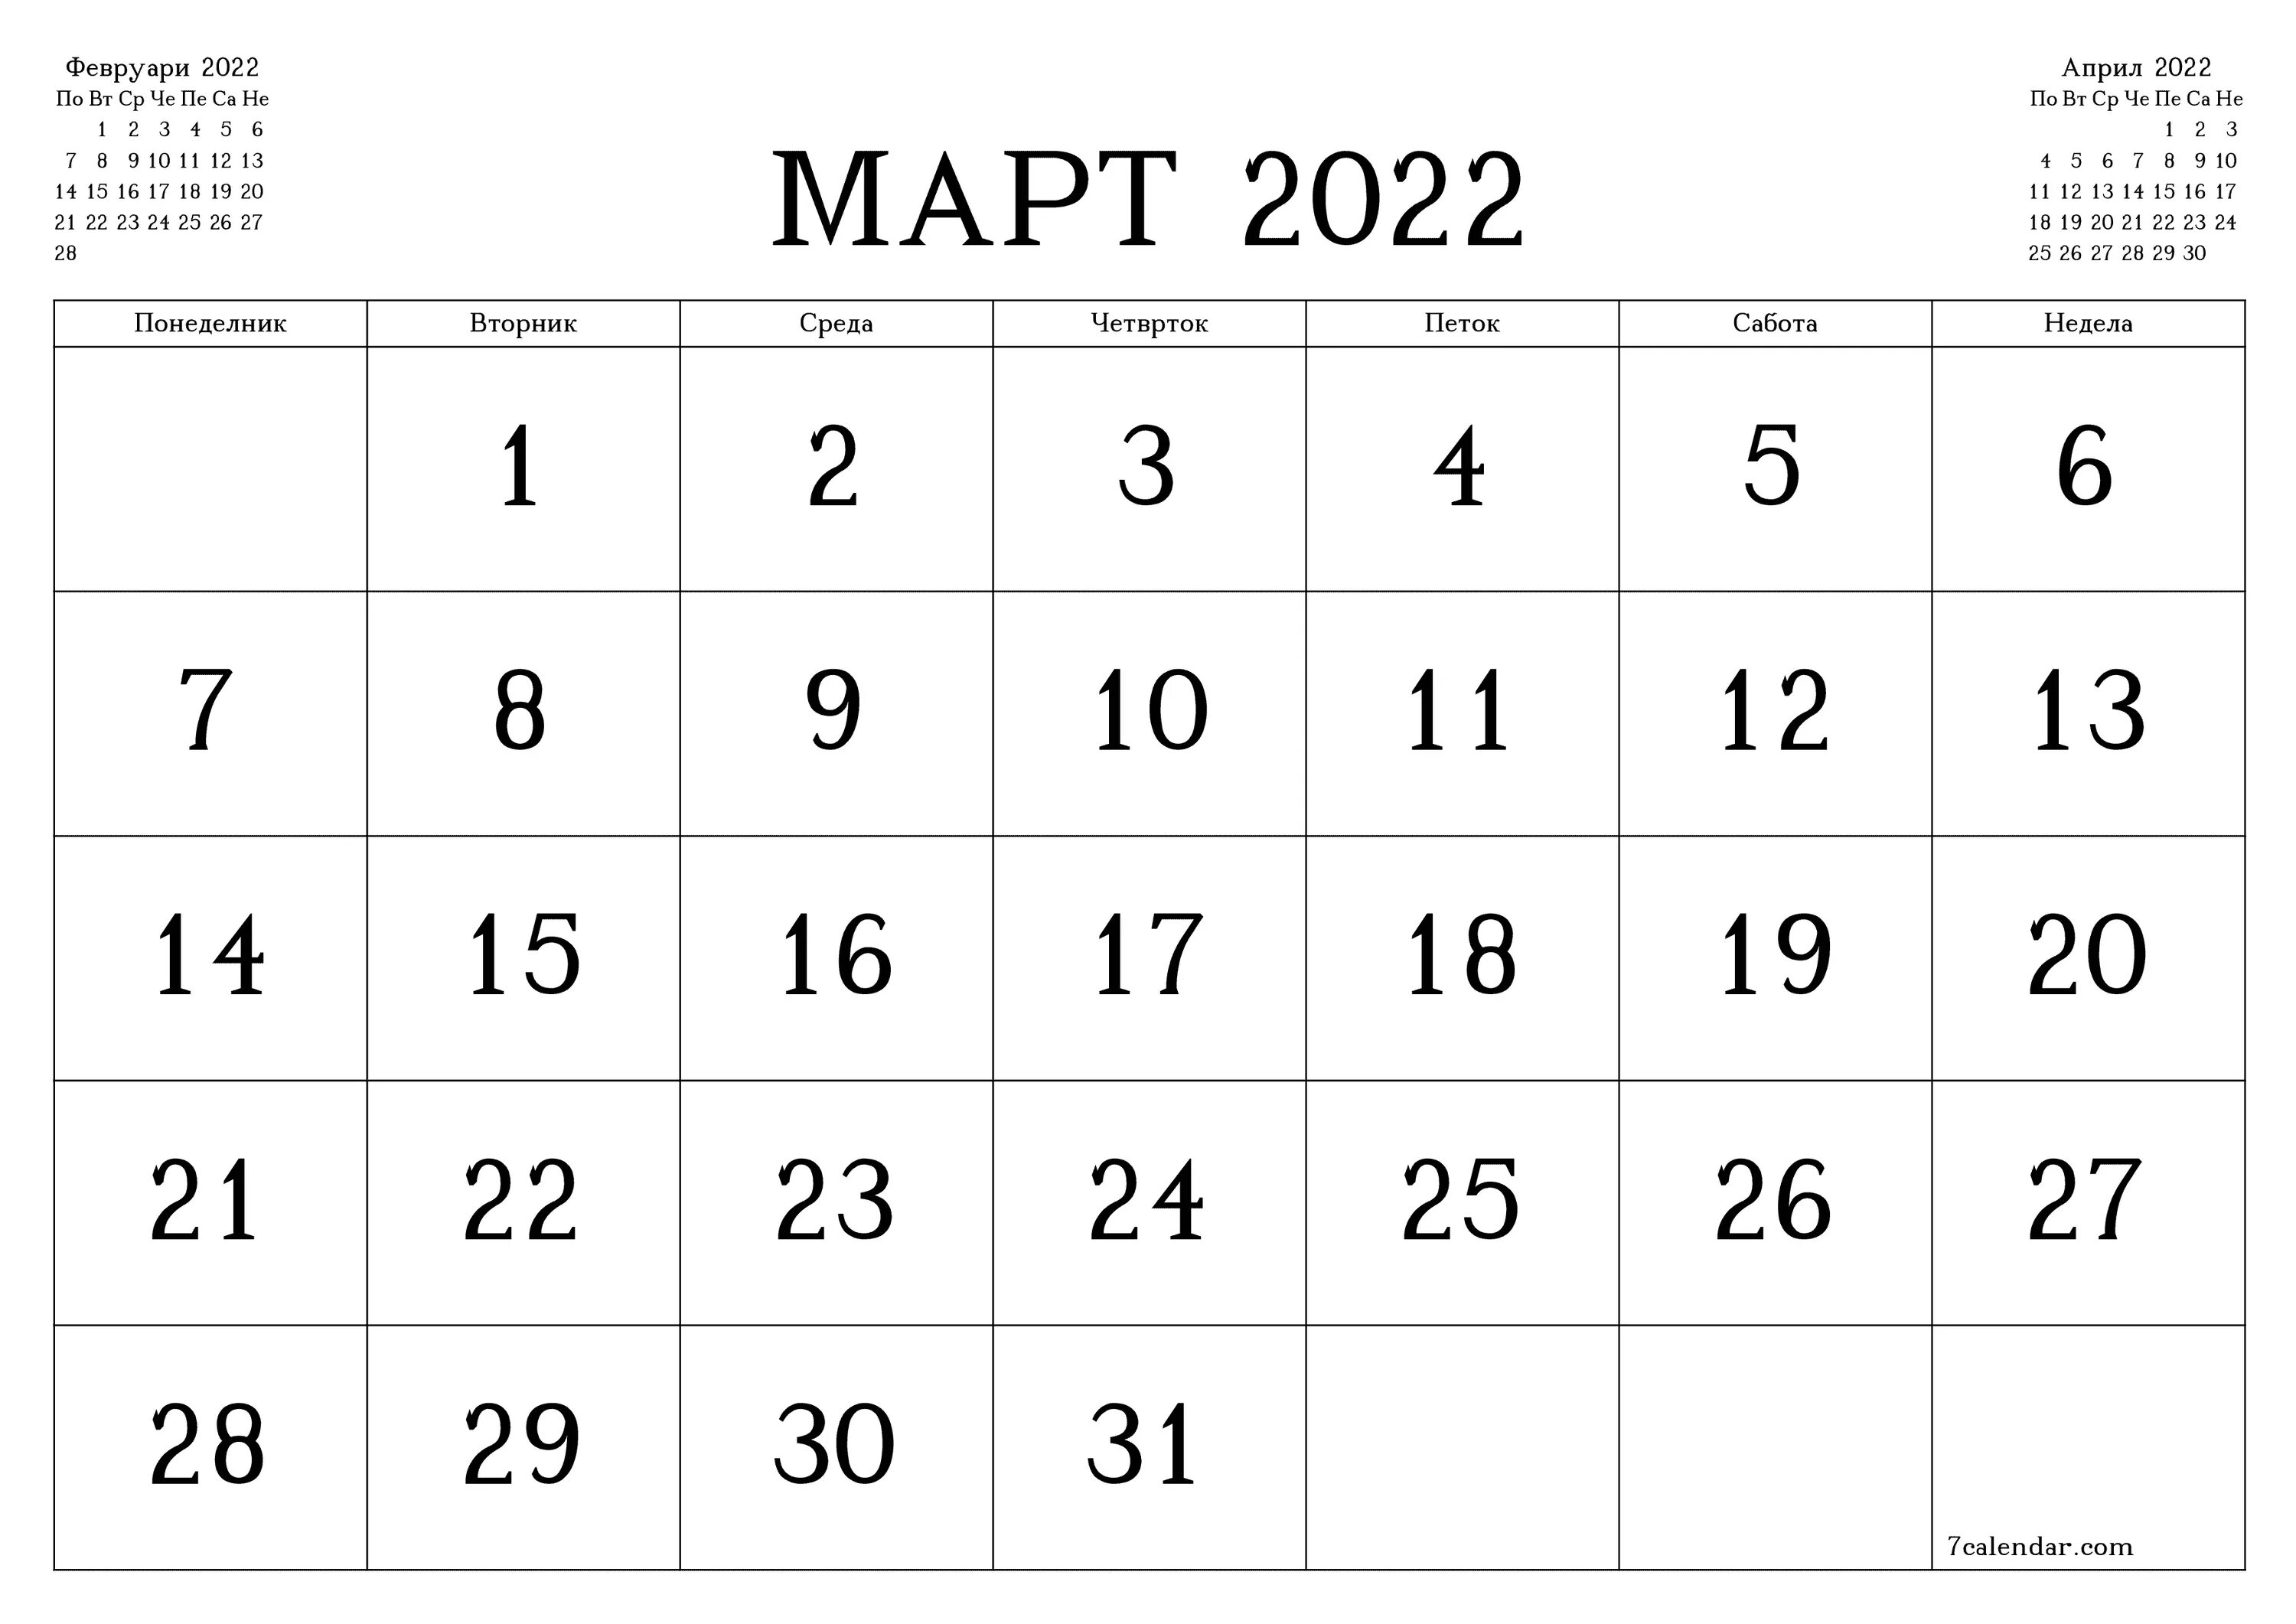 Календарь март апрель май 2024 распечатать. Календарь июль 2022. Календарь март 2022. Календарь 2022 март месяц. Календарь на март месяц 2022 года.